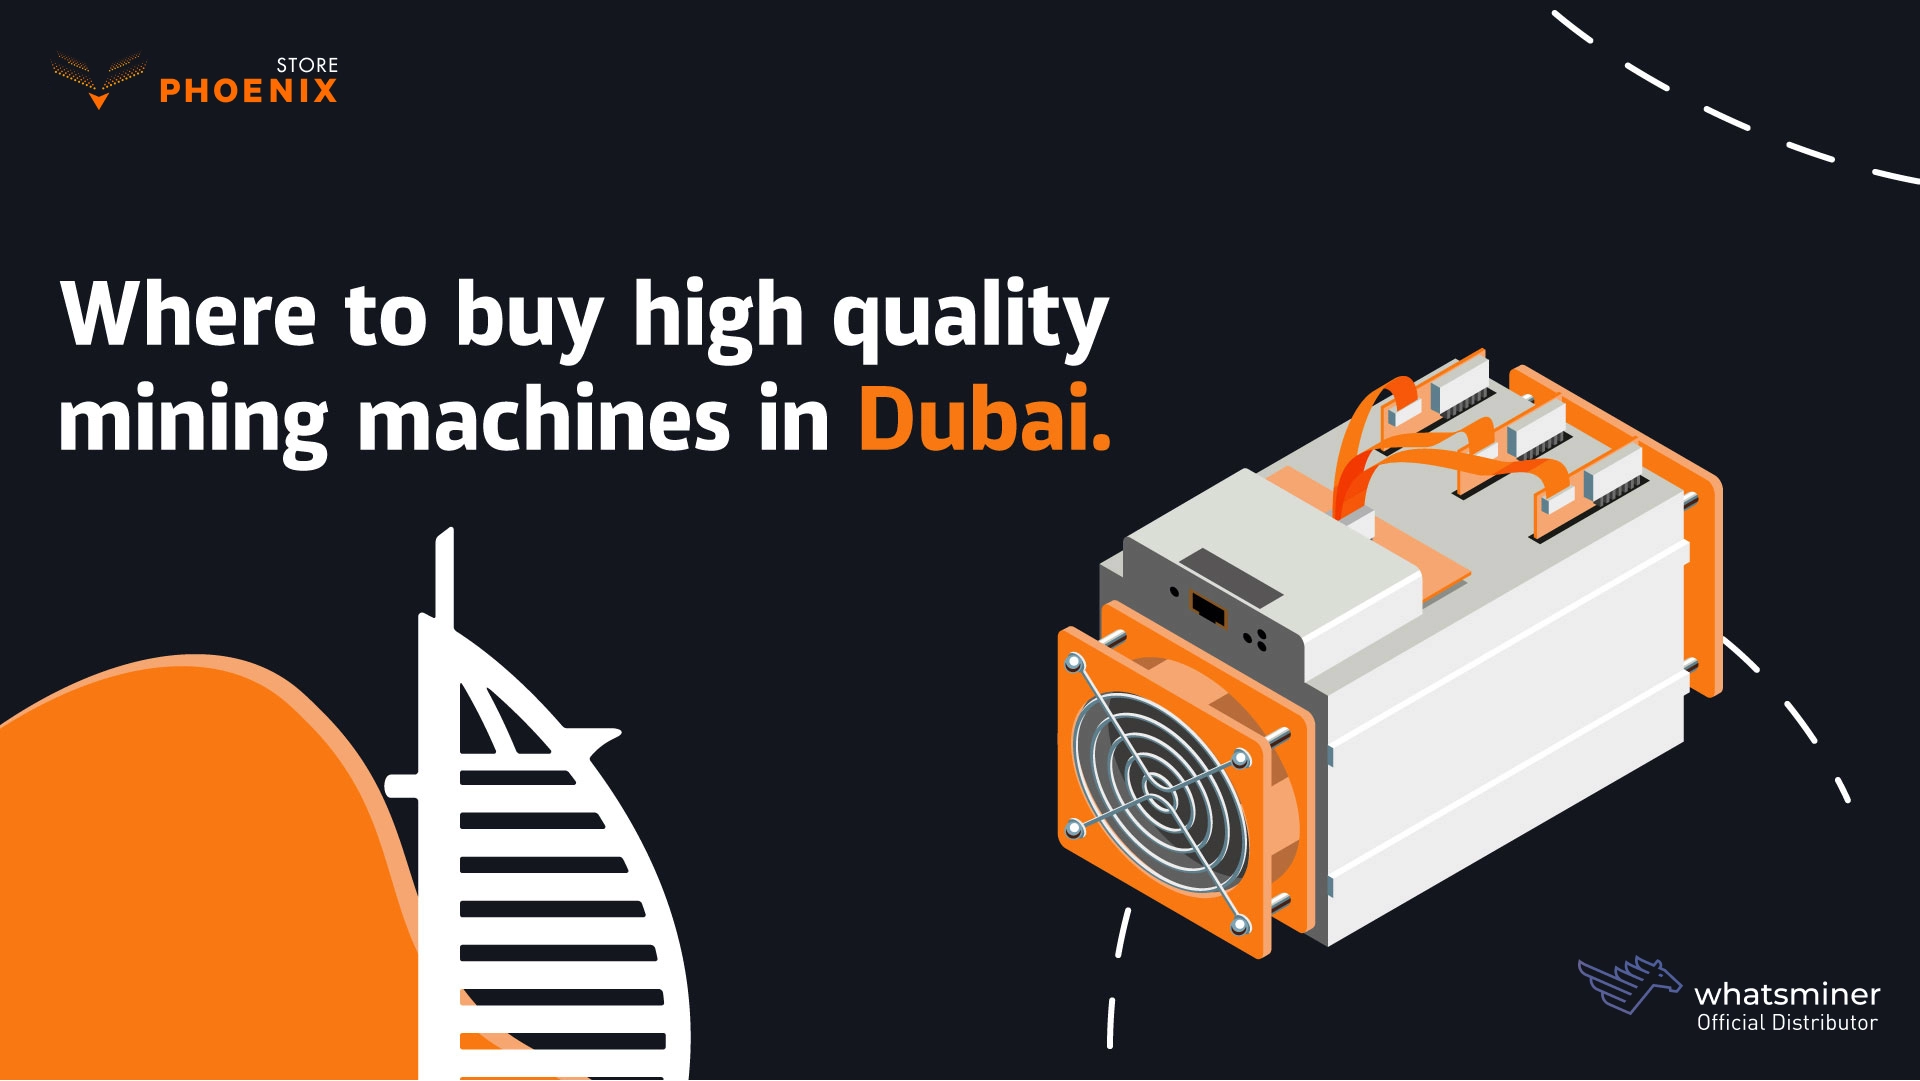 Where to Buy High Quality Mining Machines in Dubai